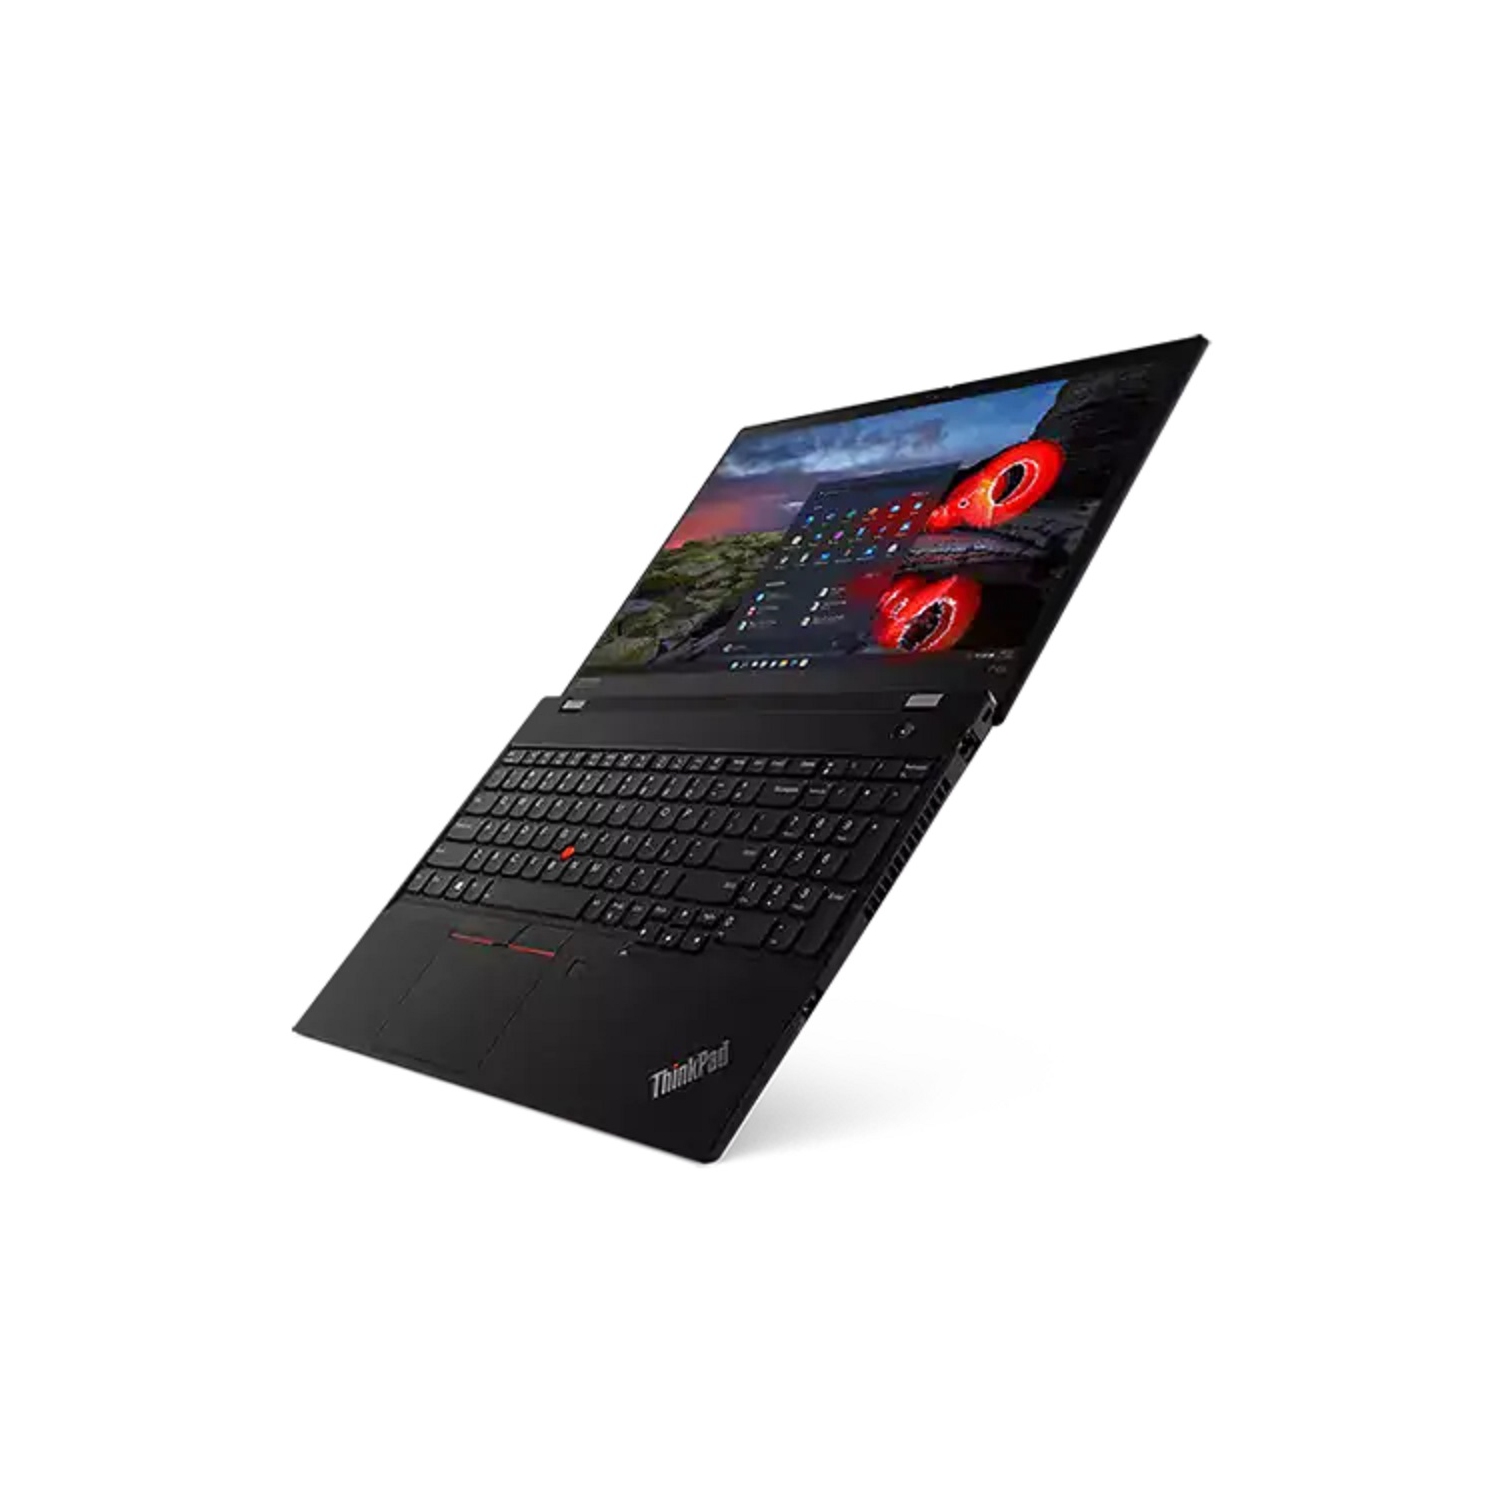 Lenovo ThinkPad P15s Gen 2 Mobile Workstation 15.6" FHD Laptop (Intel Core i5-1135G7, 8GB RAM, 512GB SSD, Windows 10 Pro, NVIDIA Quadro T500 4GB) - 20W6009TUS